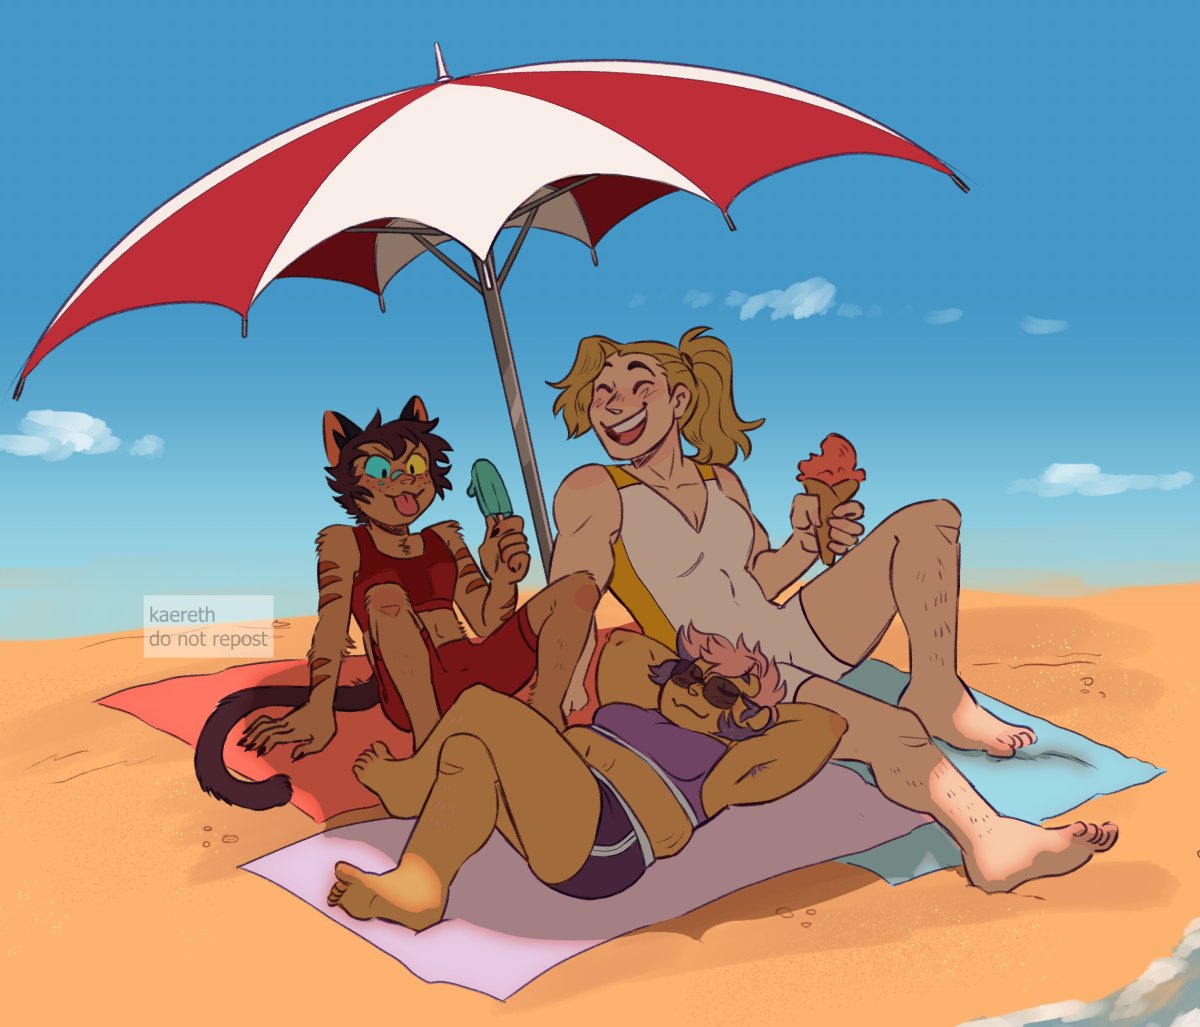 Glitradora having some chill beach time for a kofi! I want this so bad >o<